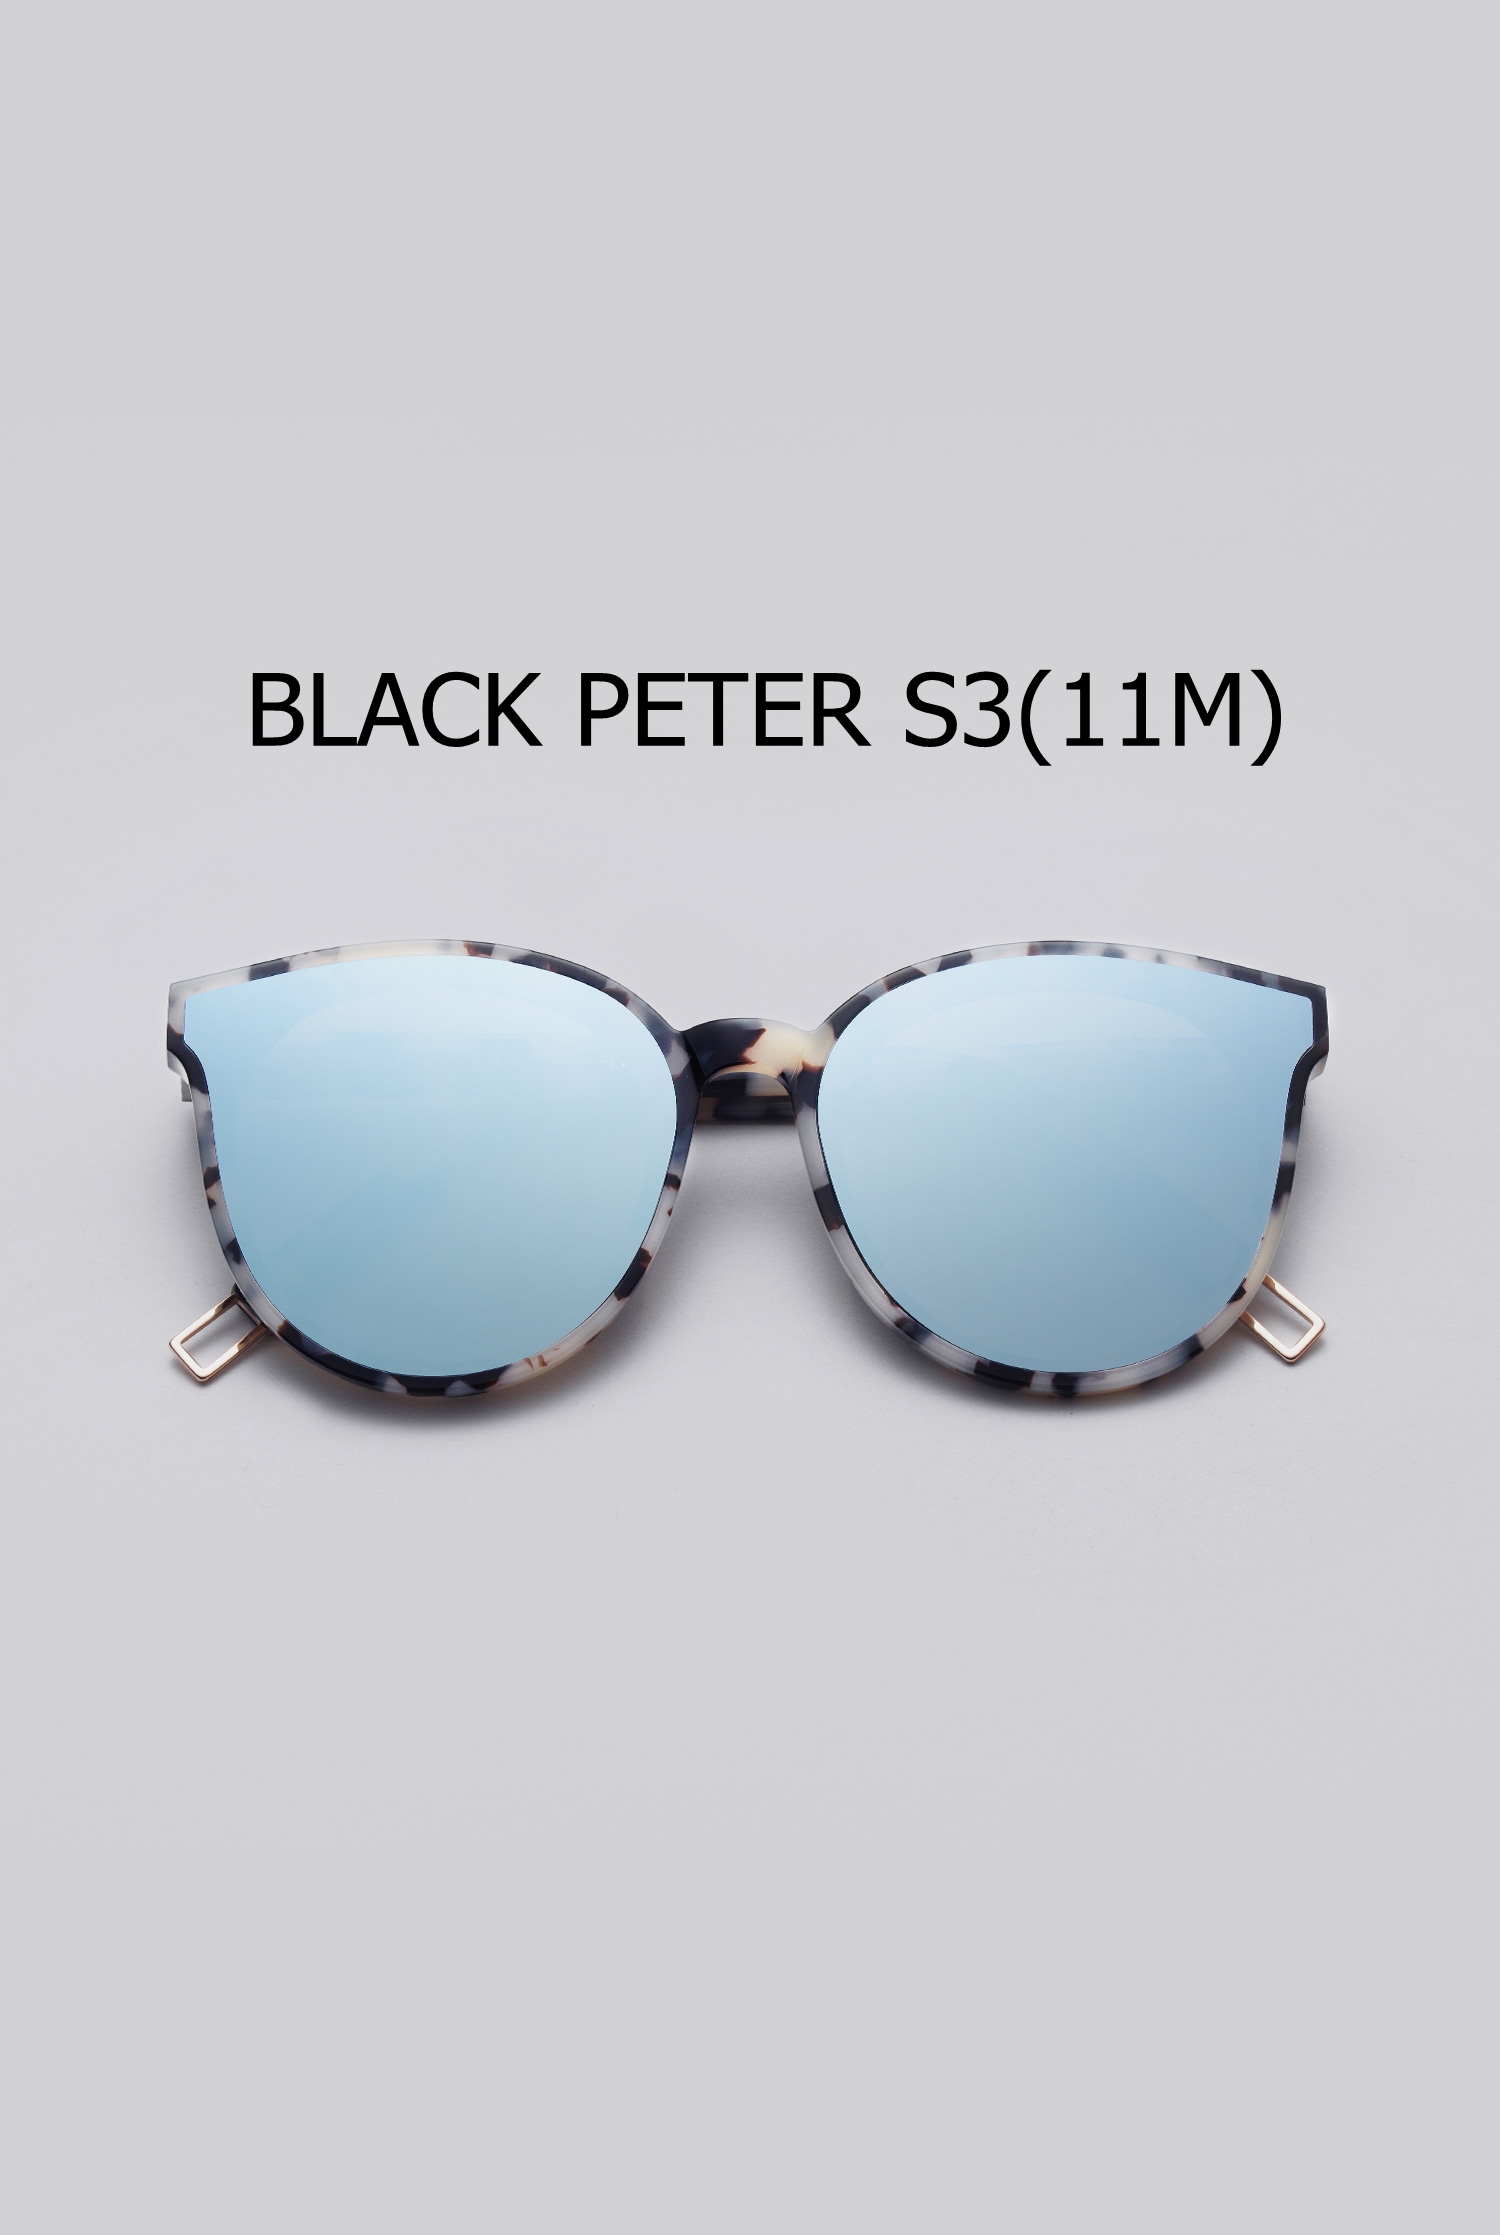 BLACK PETER S3(11M)